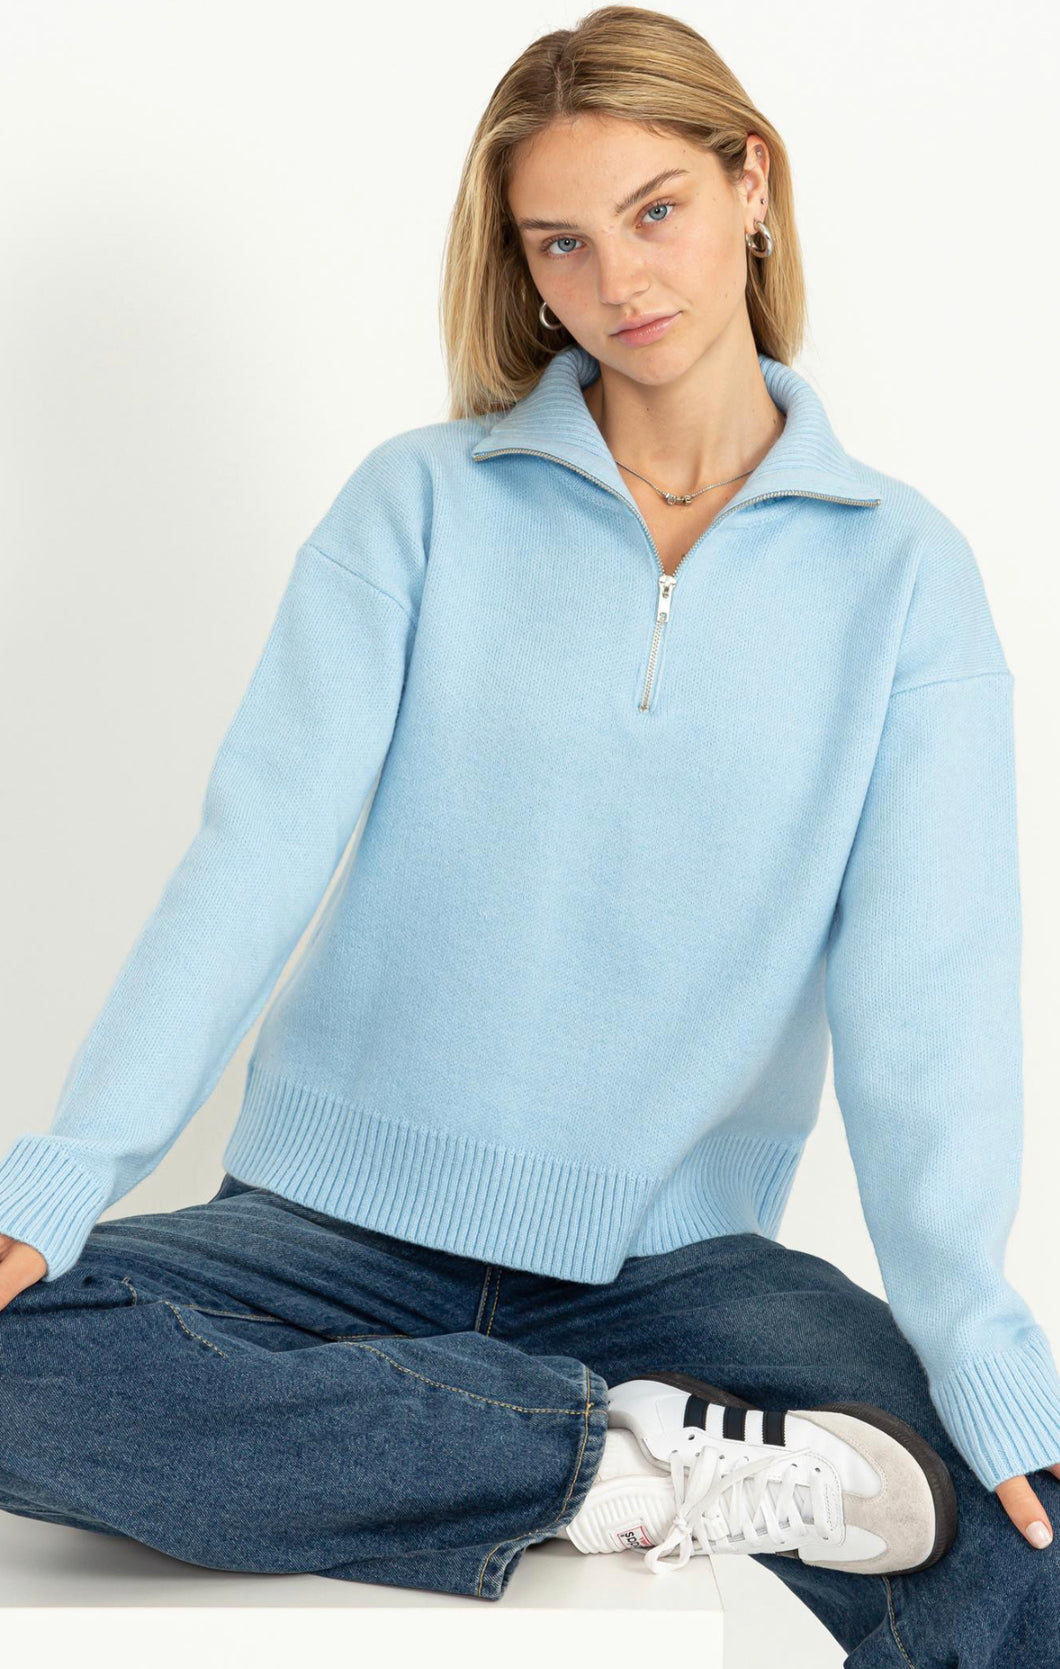 Sky blue half zip soft knit sweater